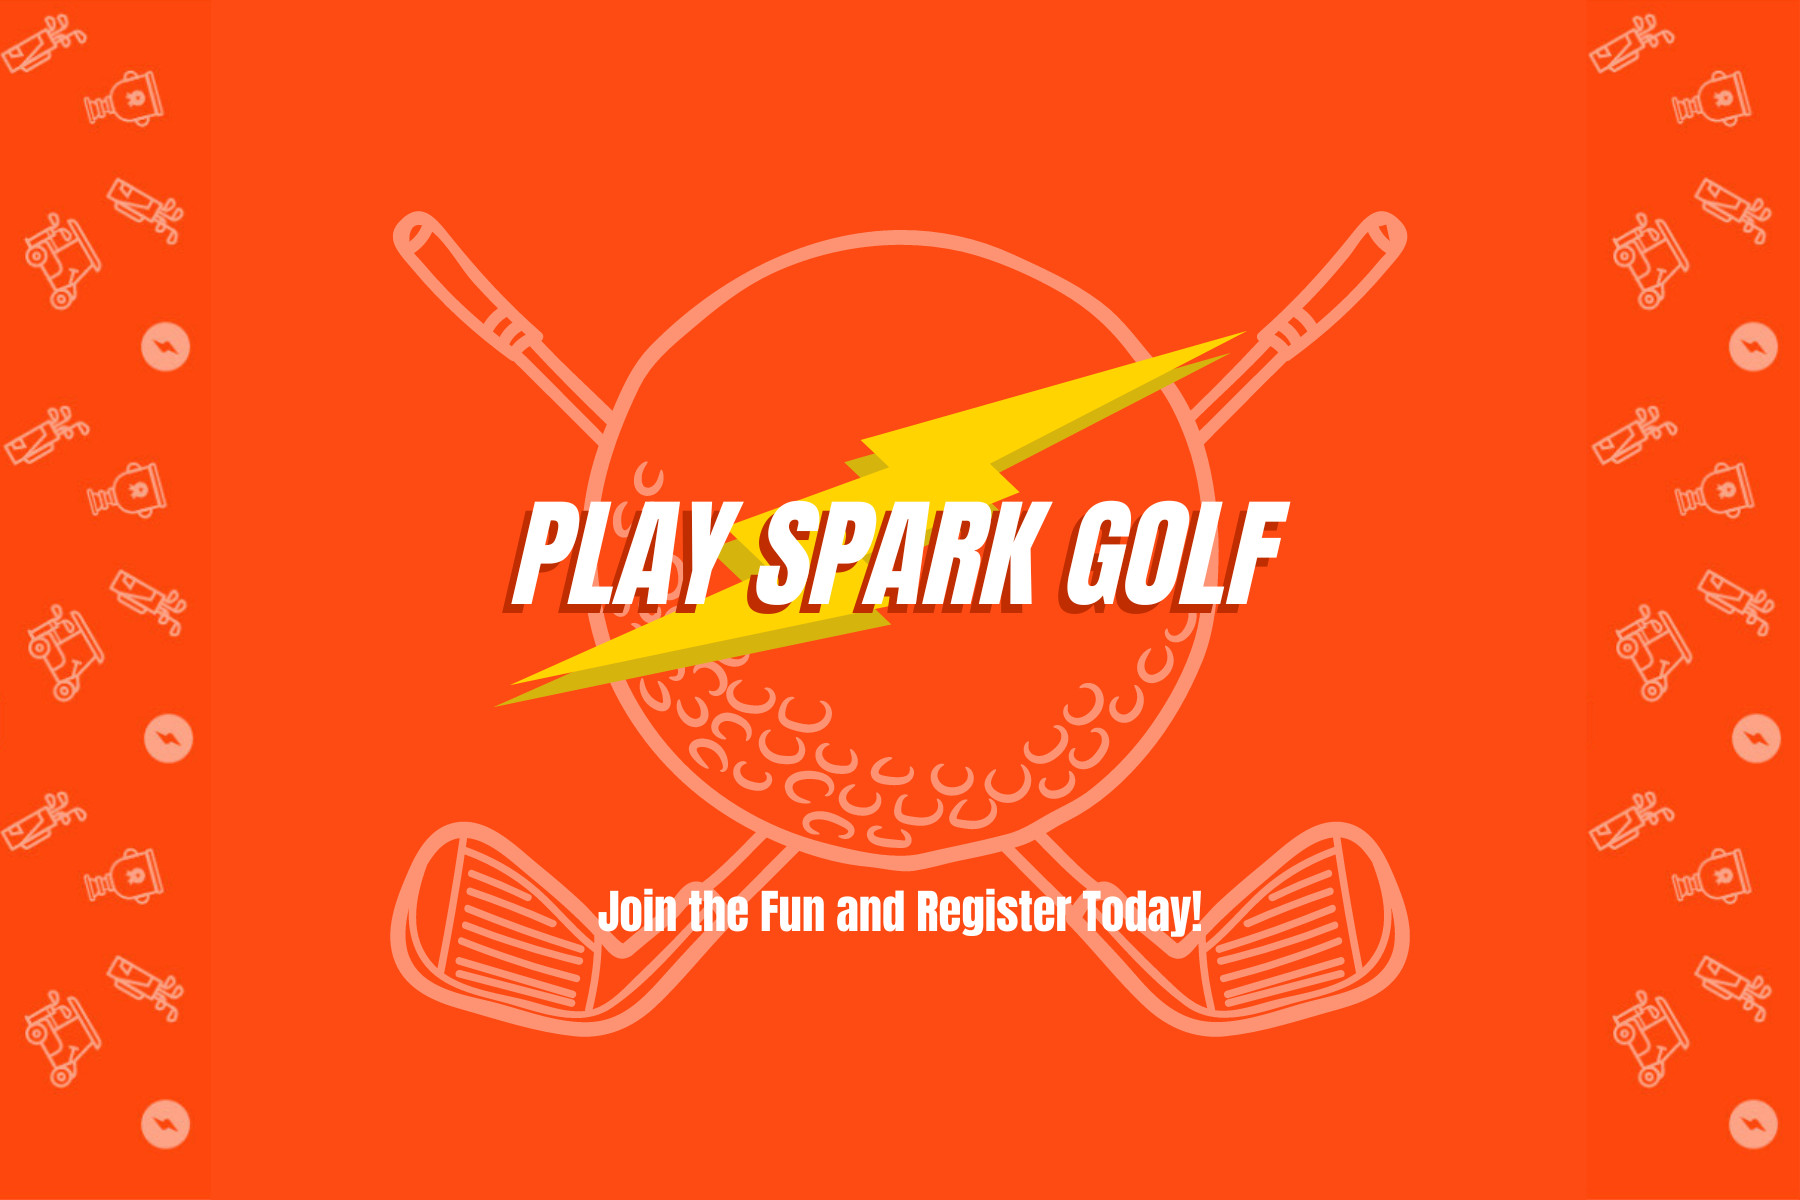 Play Spark Golf 6 x 4 in